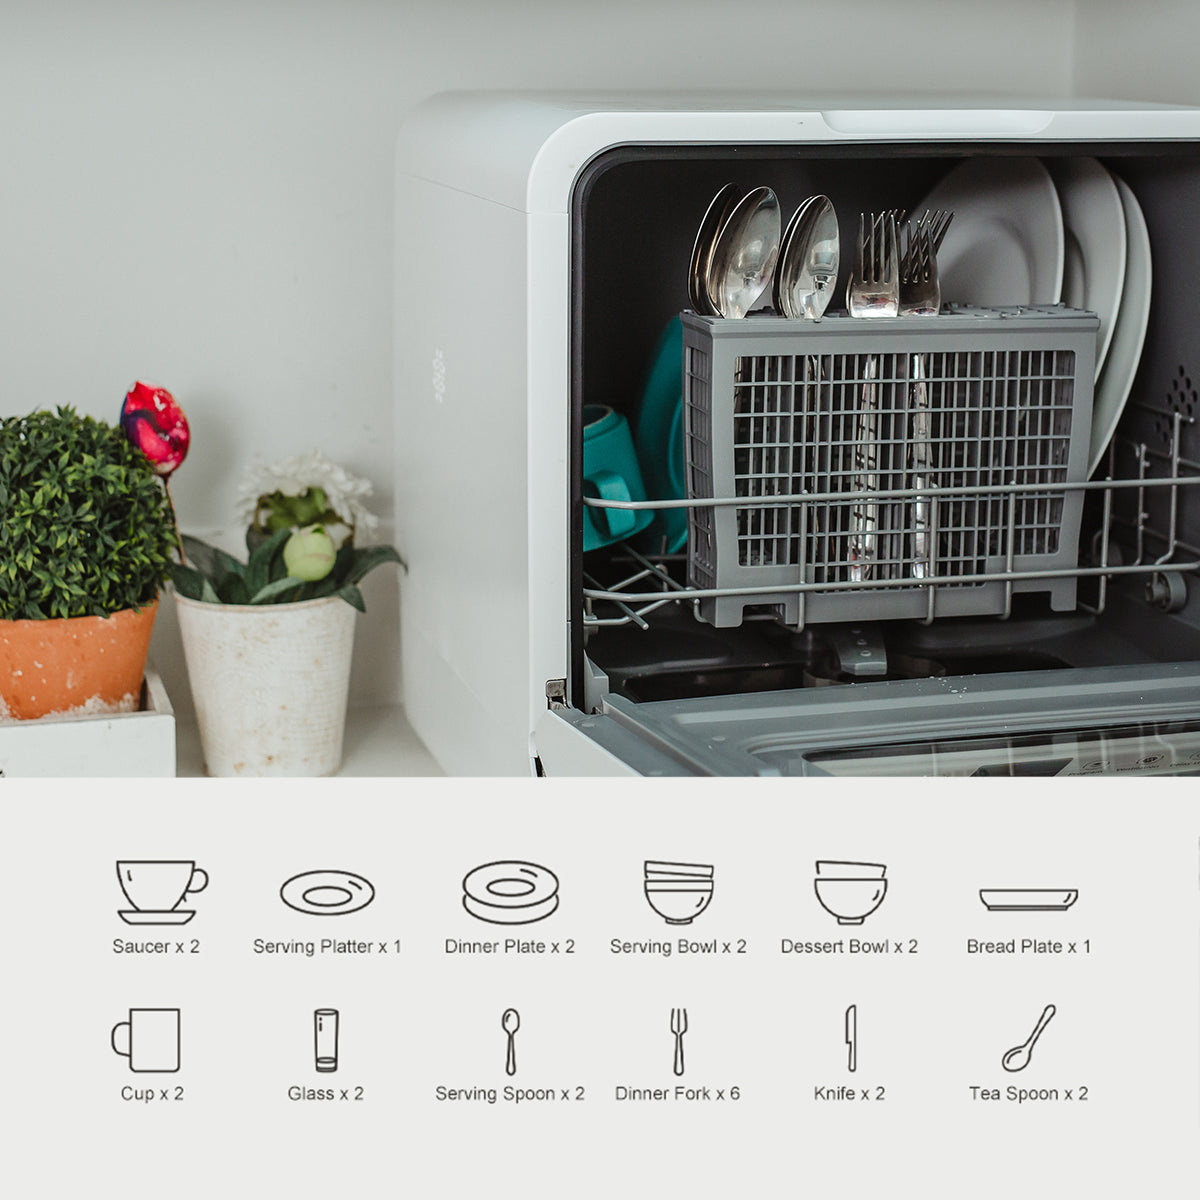 VENTRAY 小型桌上型全自動智慧洗碗機 五大洗滌模式 附烘乾功能 DW55AD